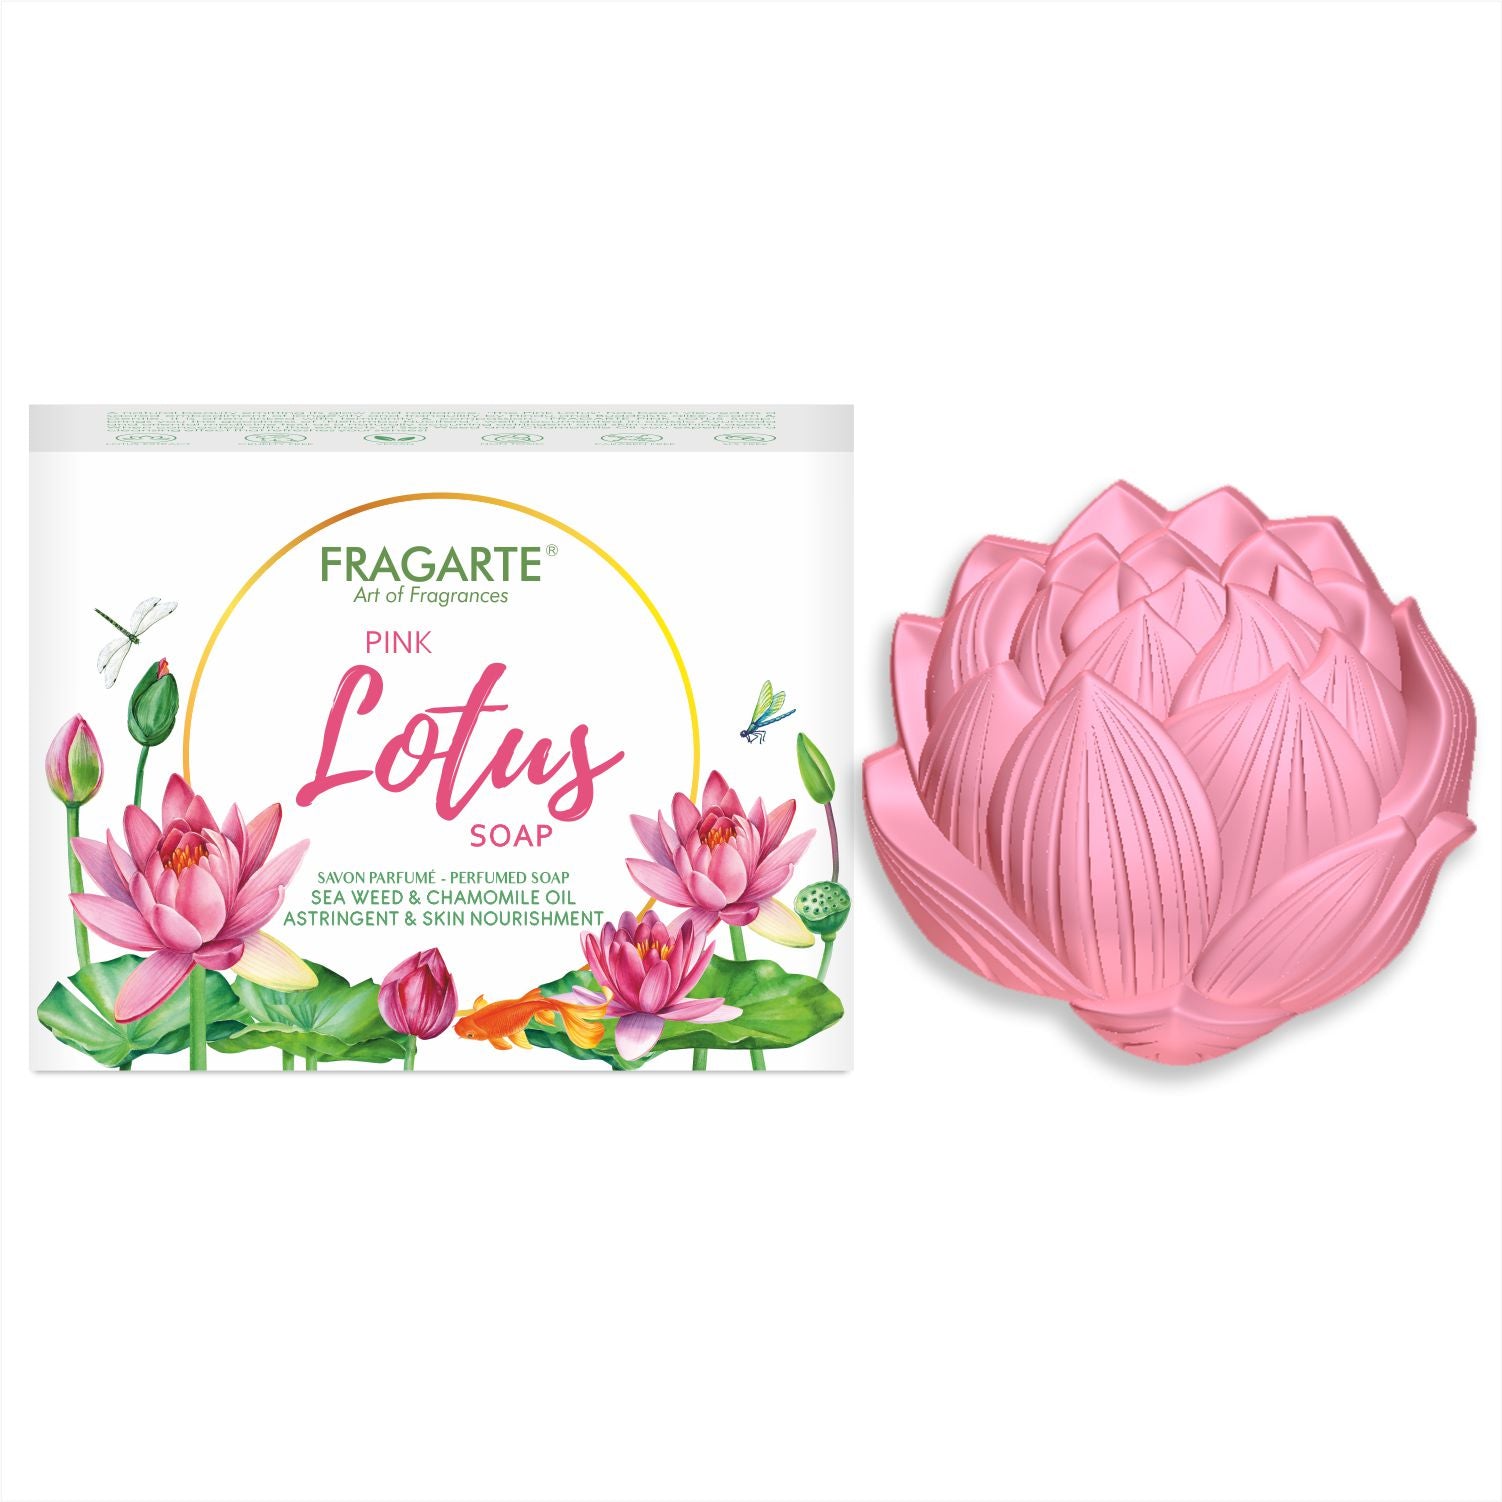 Fragarte Pink Lotus Soap